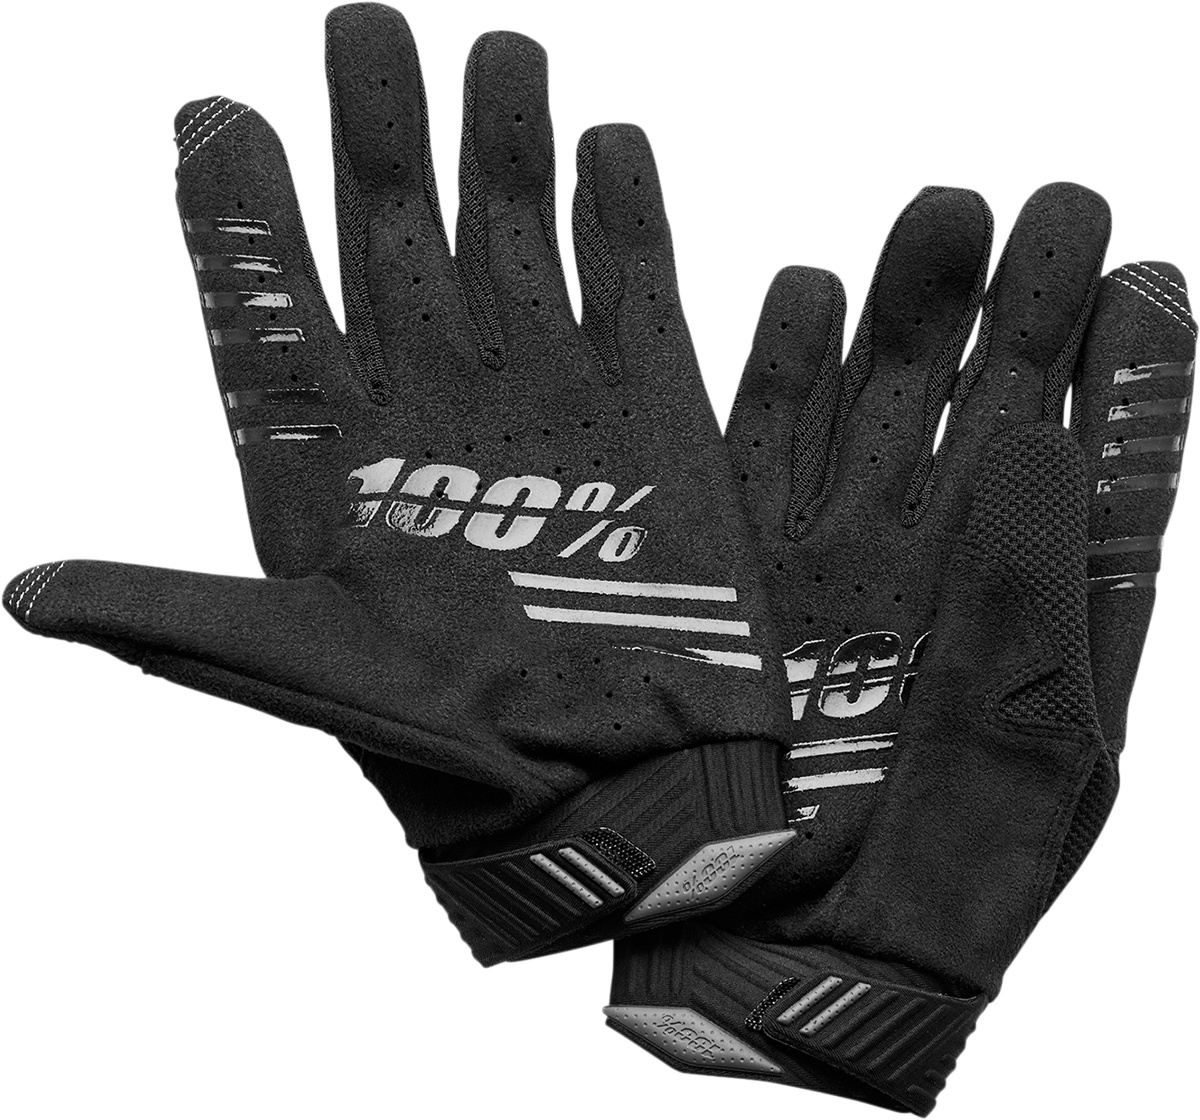 100% R-Core Gloves - Black - Large 10027-00002